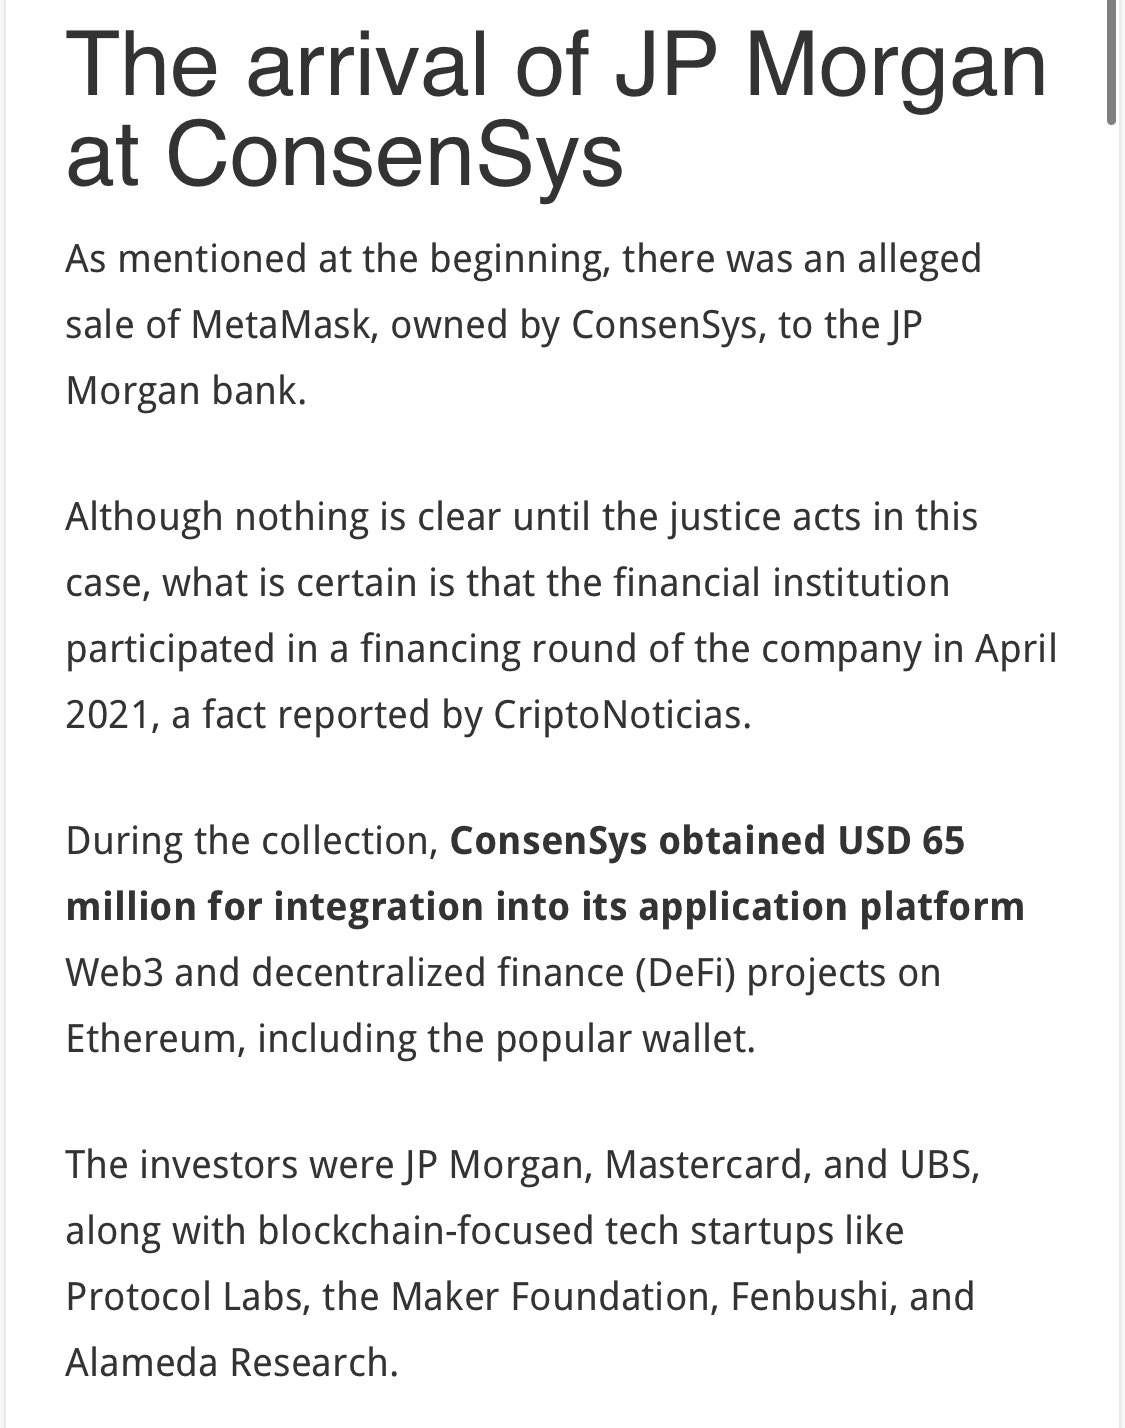 JP Morgan chega à ConsenSys (Dona da MetaMask)